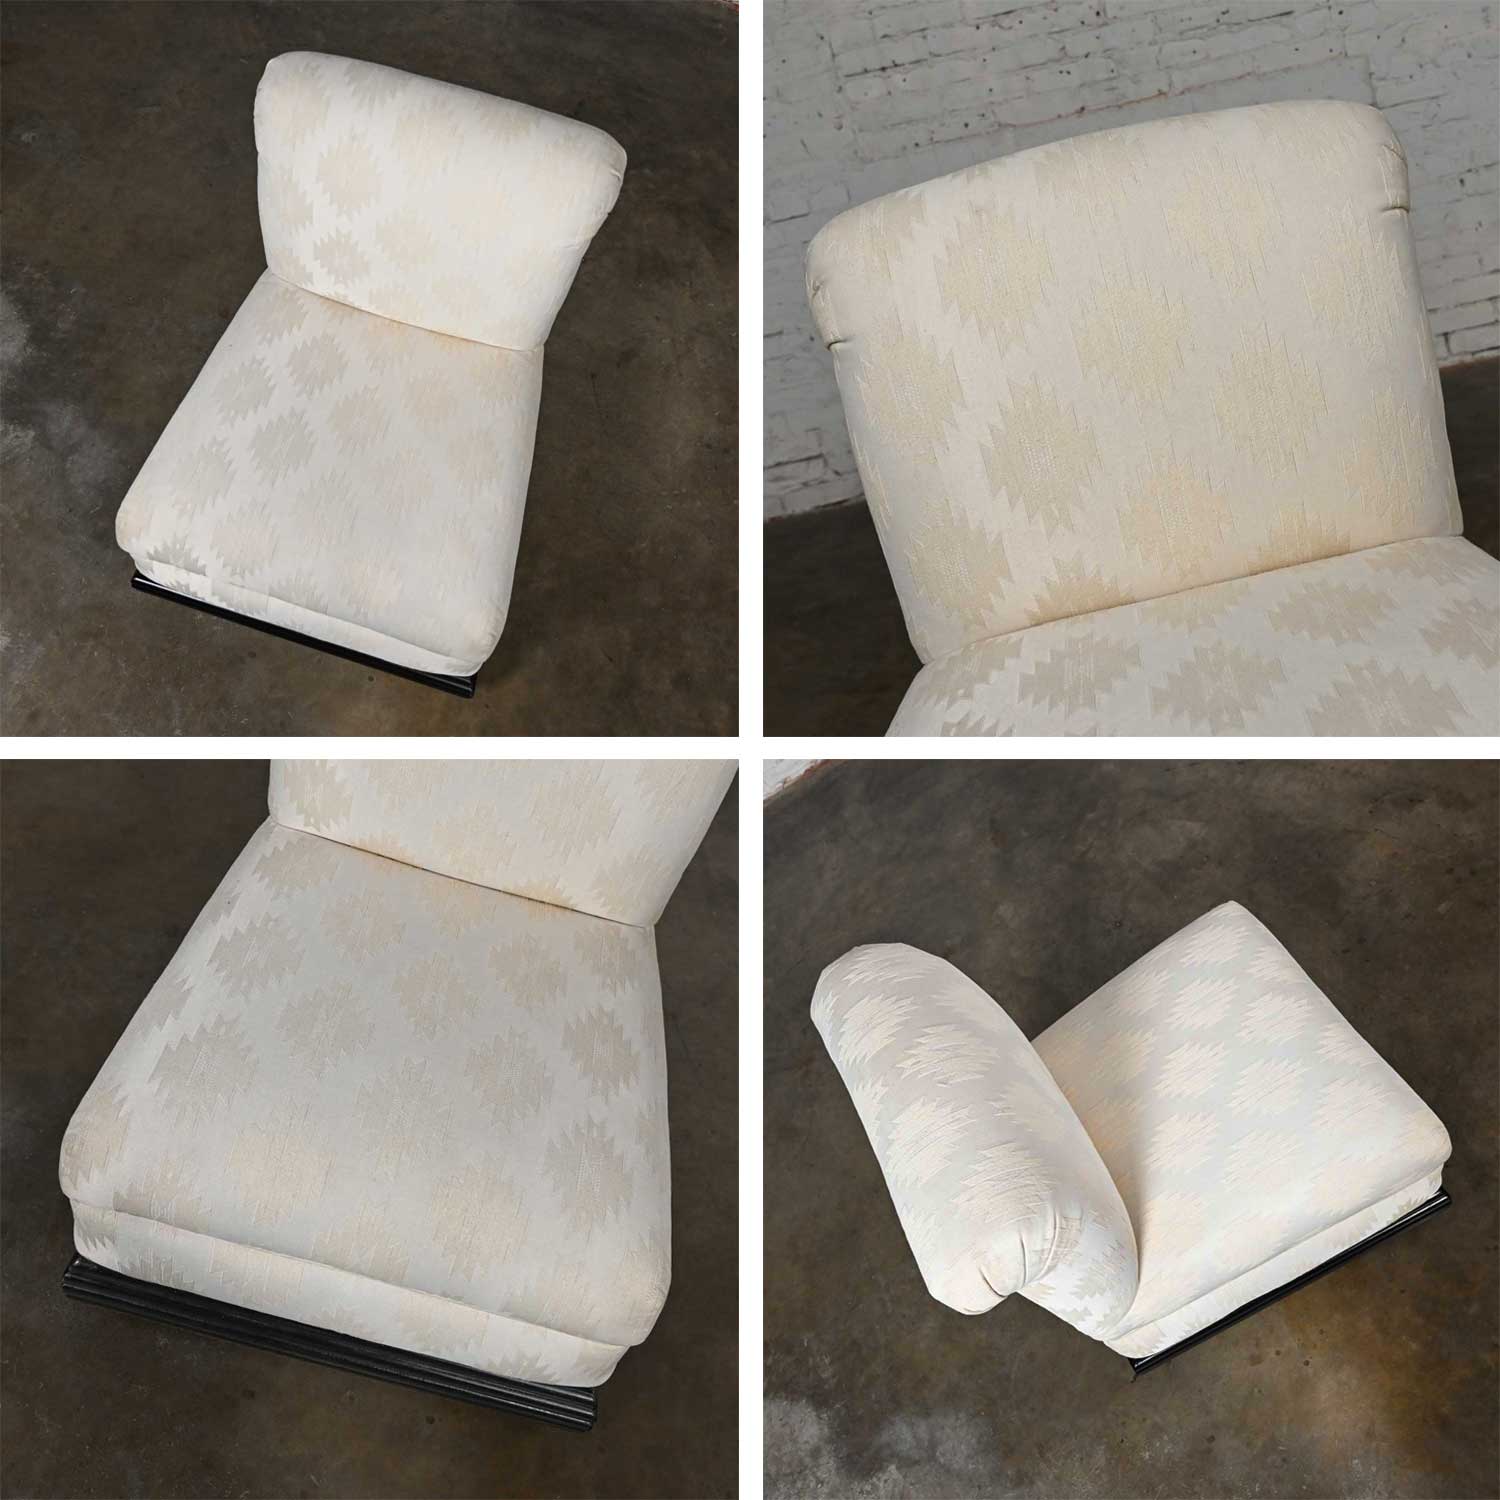 Late 20th Century Art Deco Revival White Slipper Chair Rolled Back & Black Wood Base